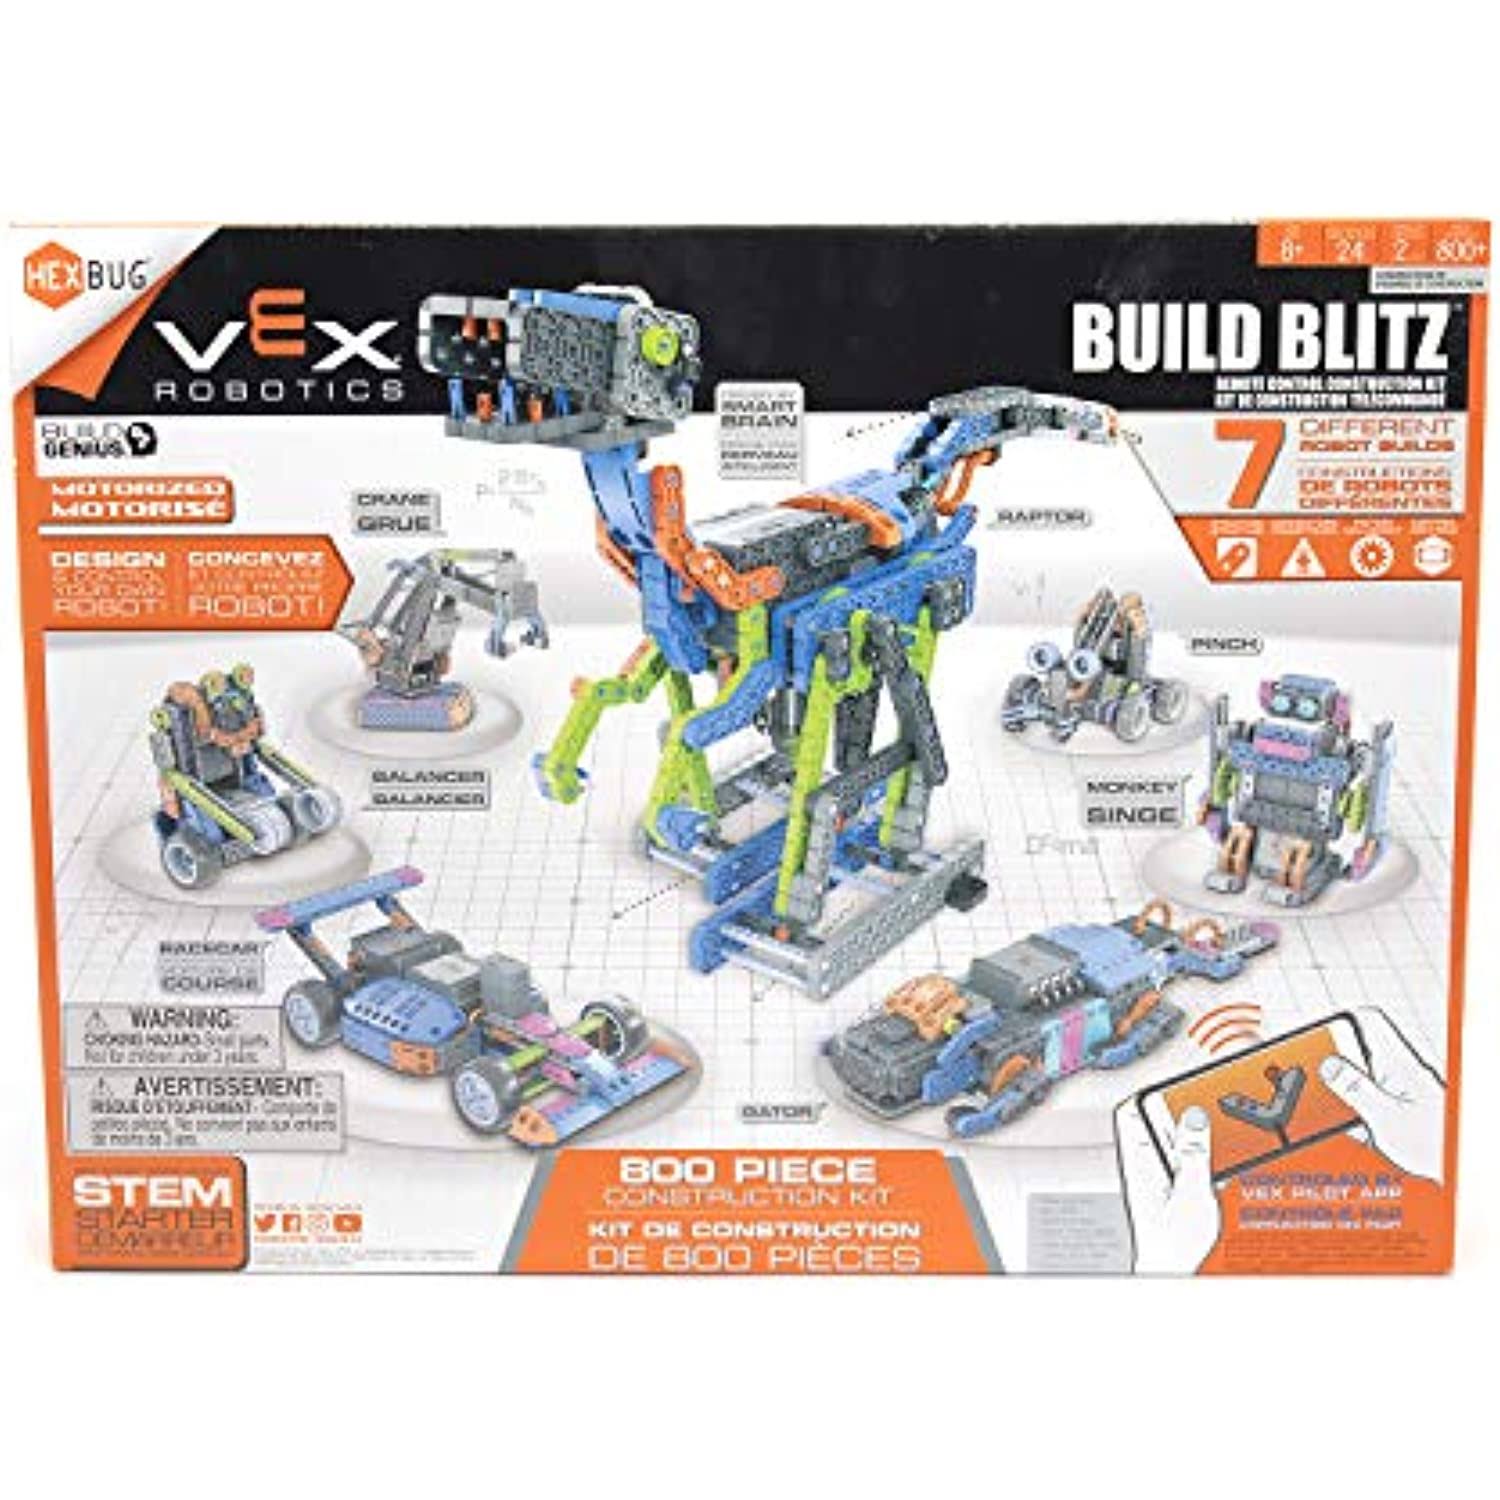 Vex Build Blitz Construction Kit